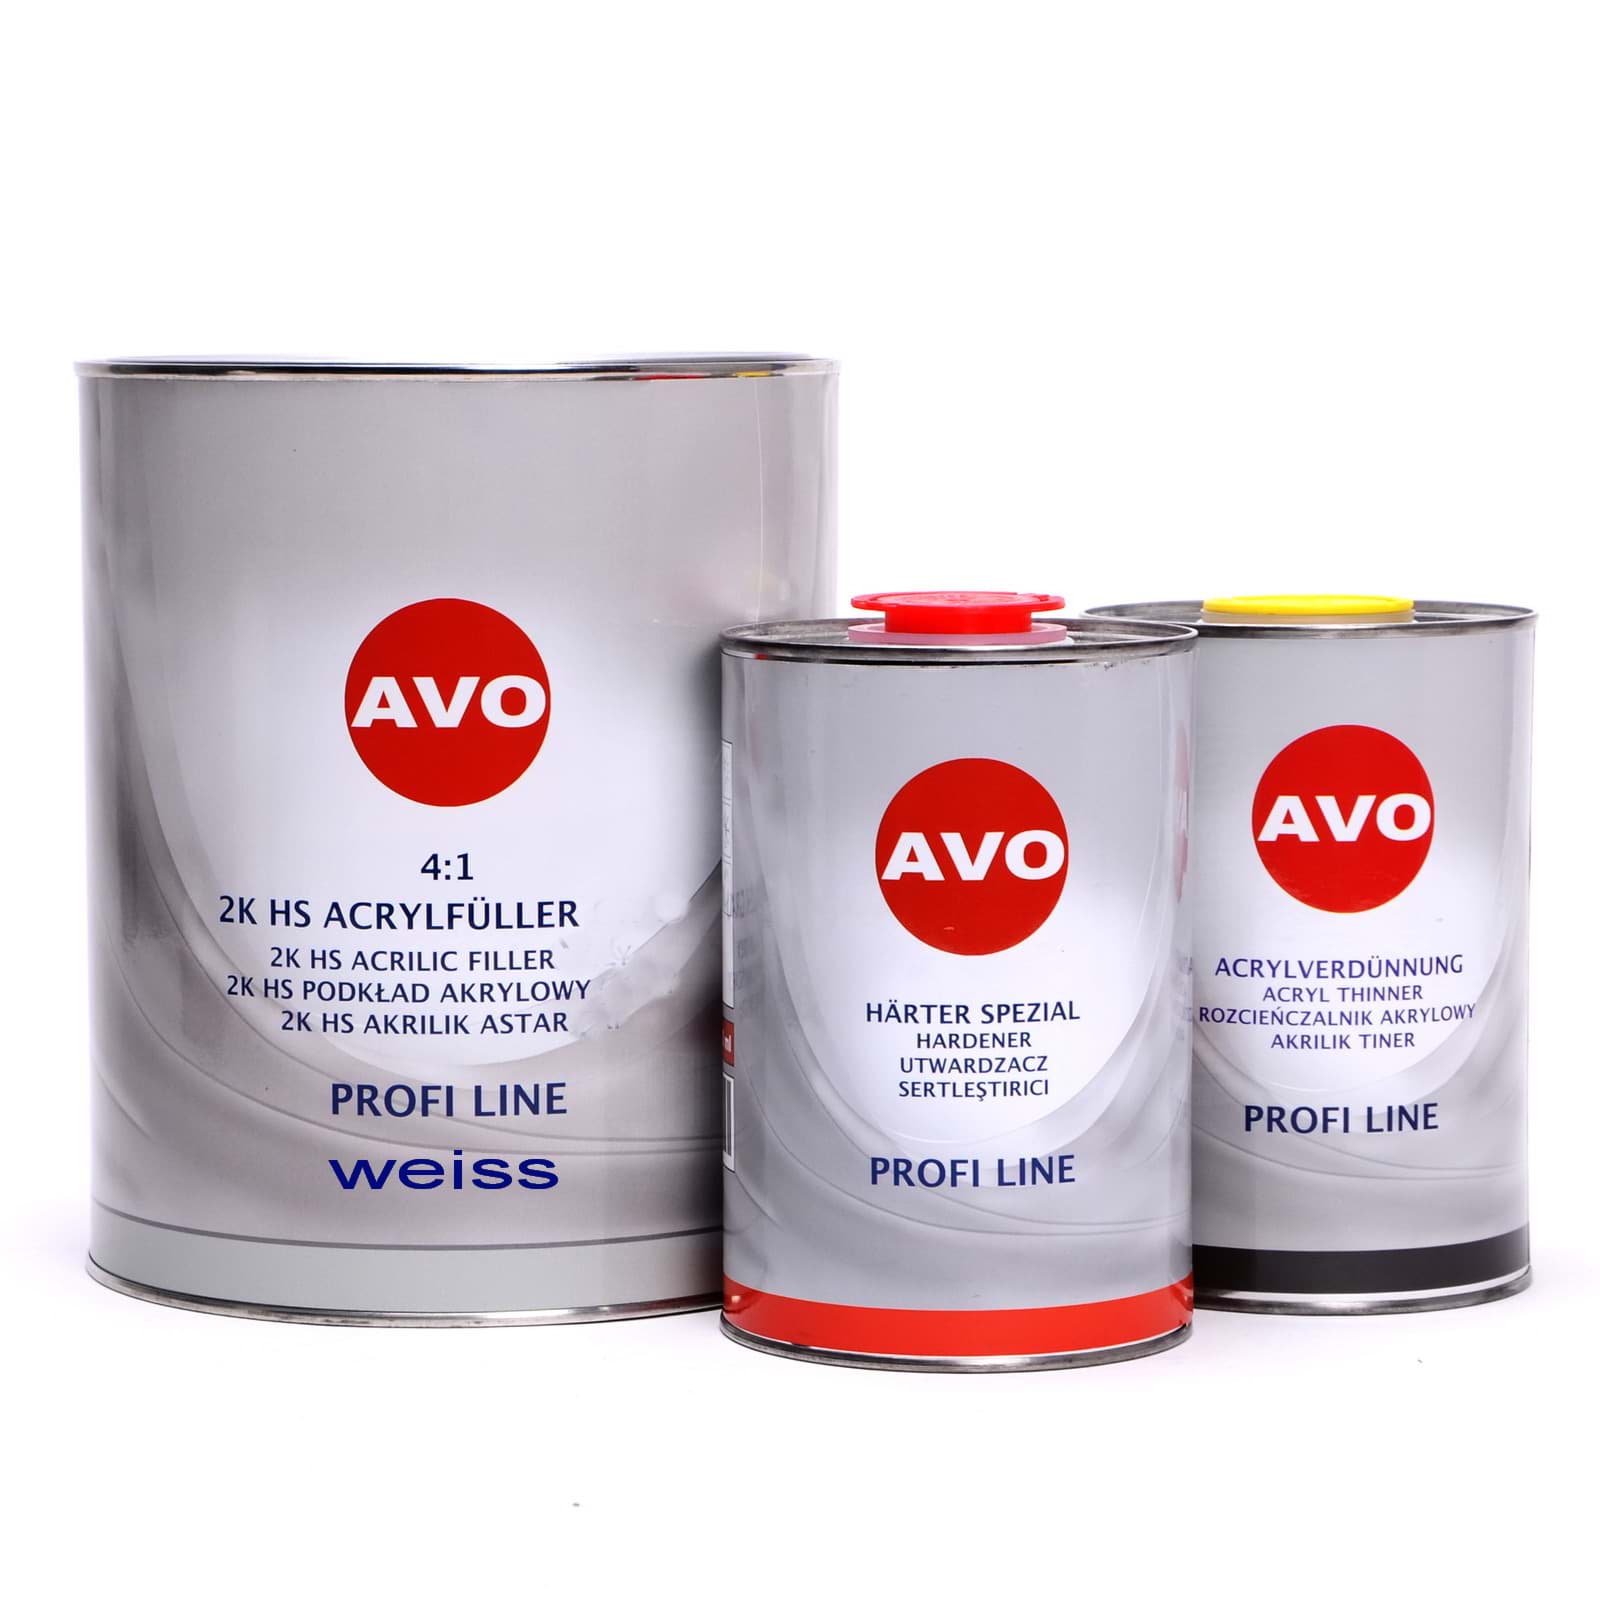 Afbeelding van AVO 2K HS 4:1 Grundier Füller  Acrylfiller weiss 6 Liter Set (4Liter Füller + 1 Liter Härter + 1 Liter 2K Acrylverdünnung)